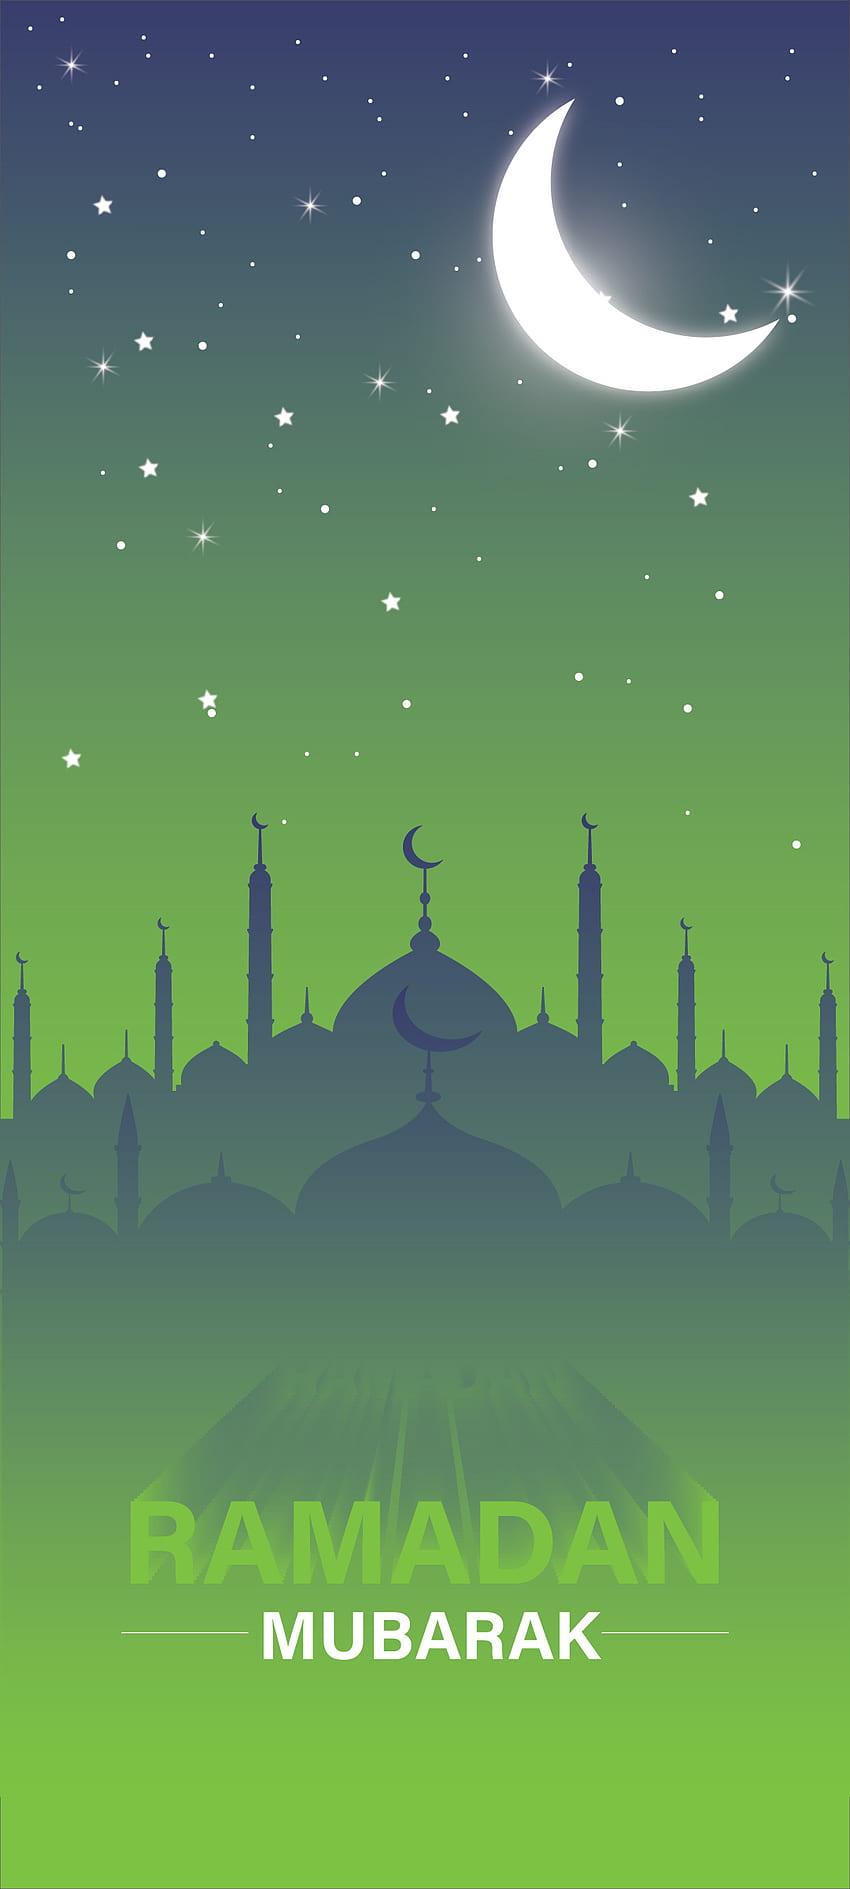 Ramadan Kareem Or Eid Mubarak Wallpaper Design Template Greeting  BackgroundI Slamic With Gold Patterned Royalty Free SVG Cliparts  Vectors And Stock Illustration Image 117468651